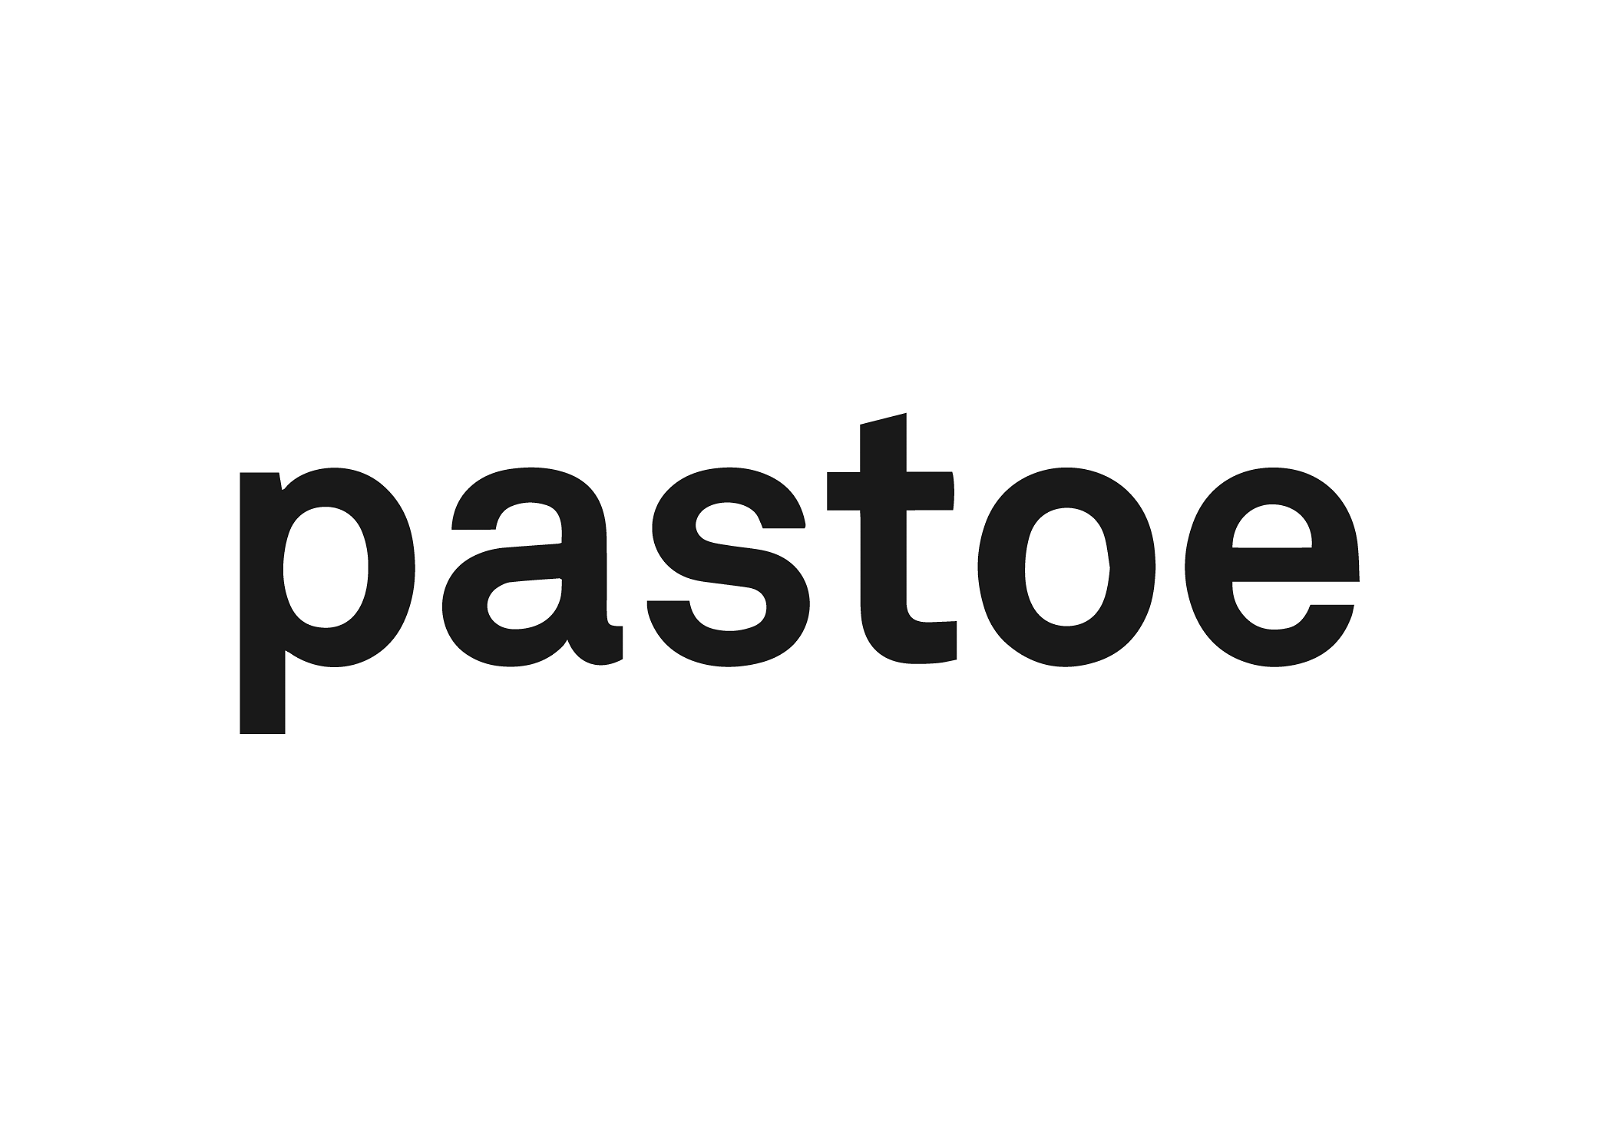 Pastoe